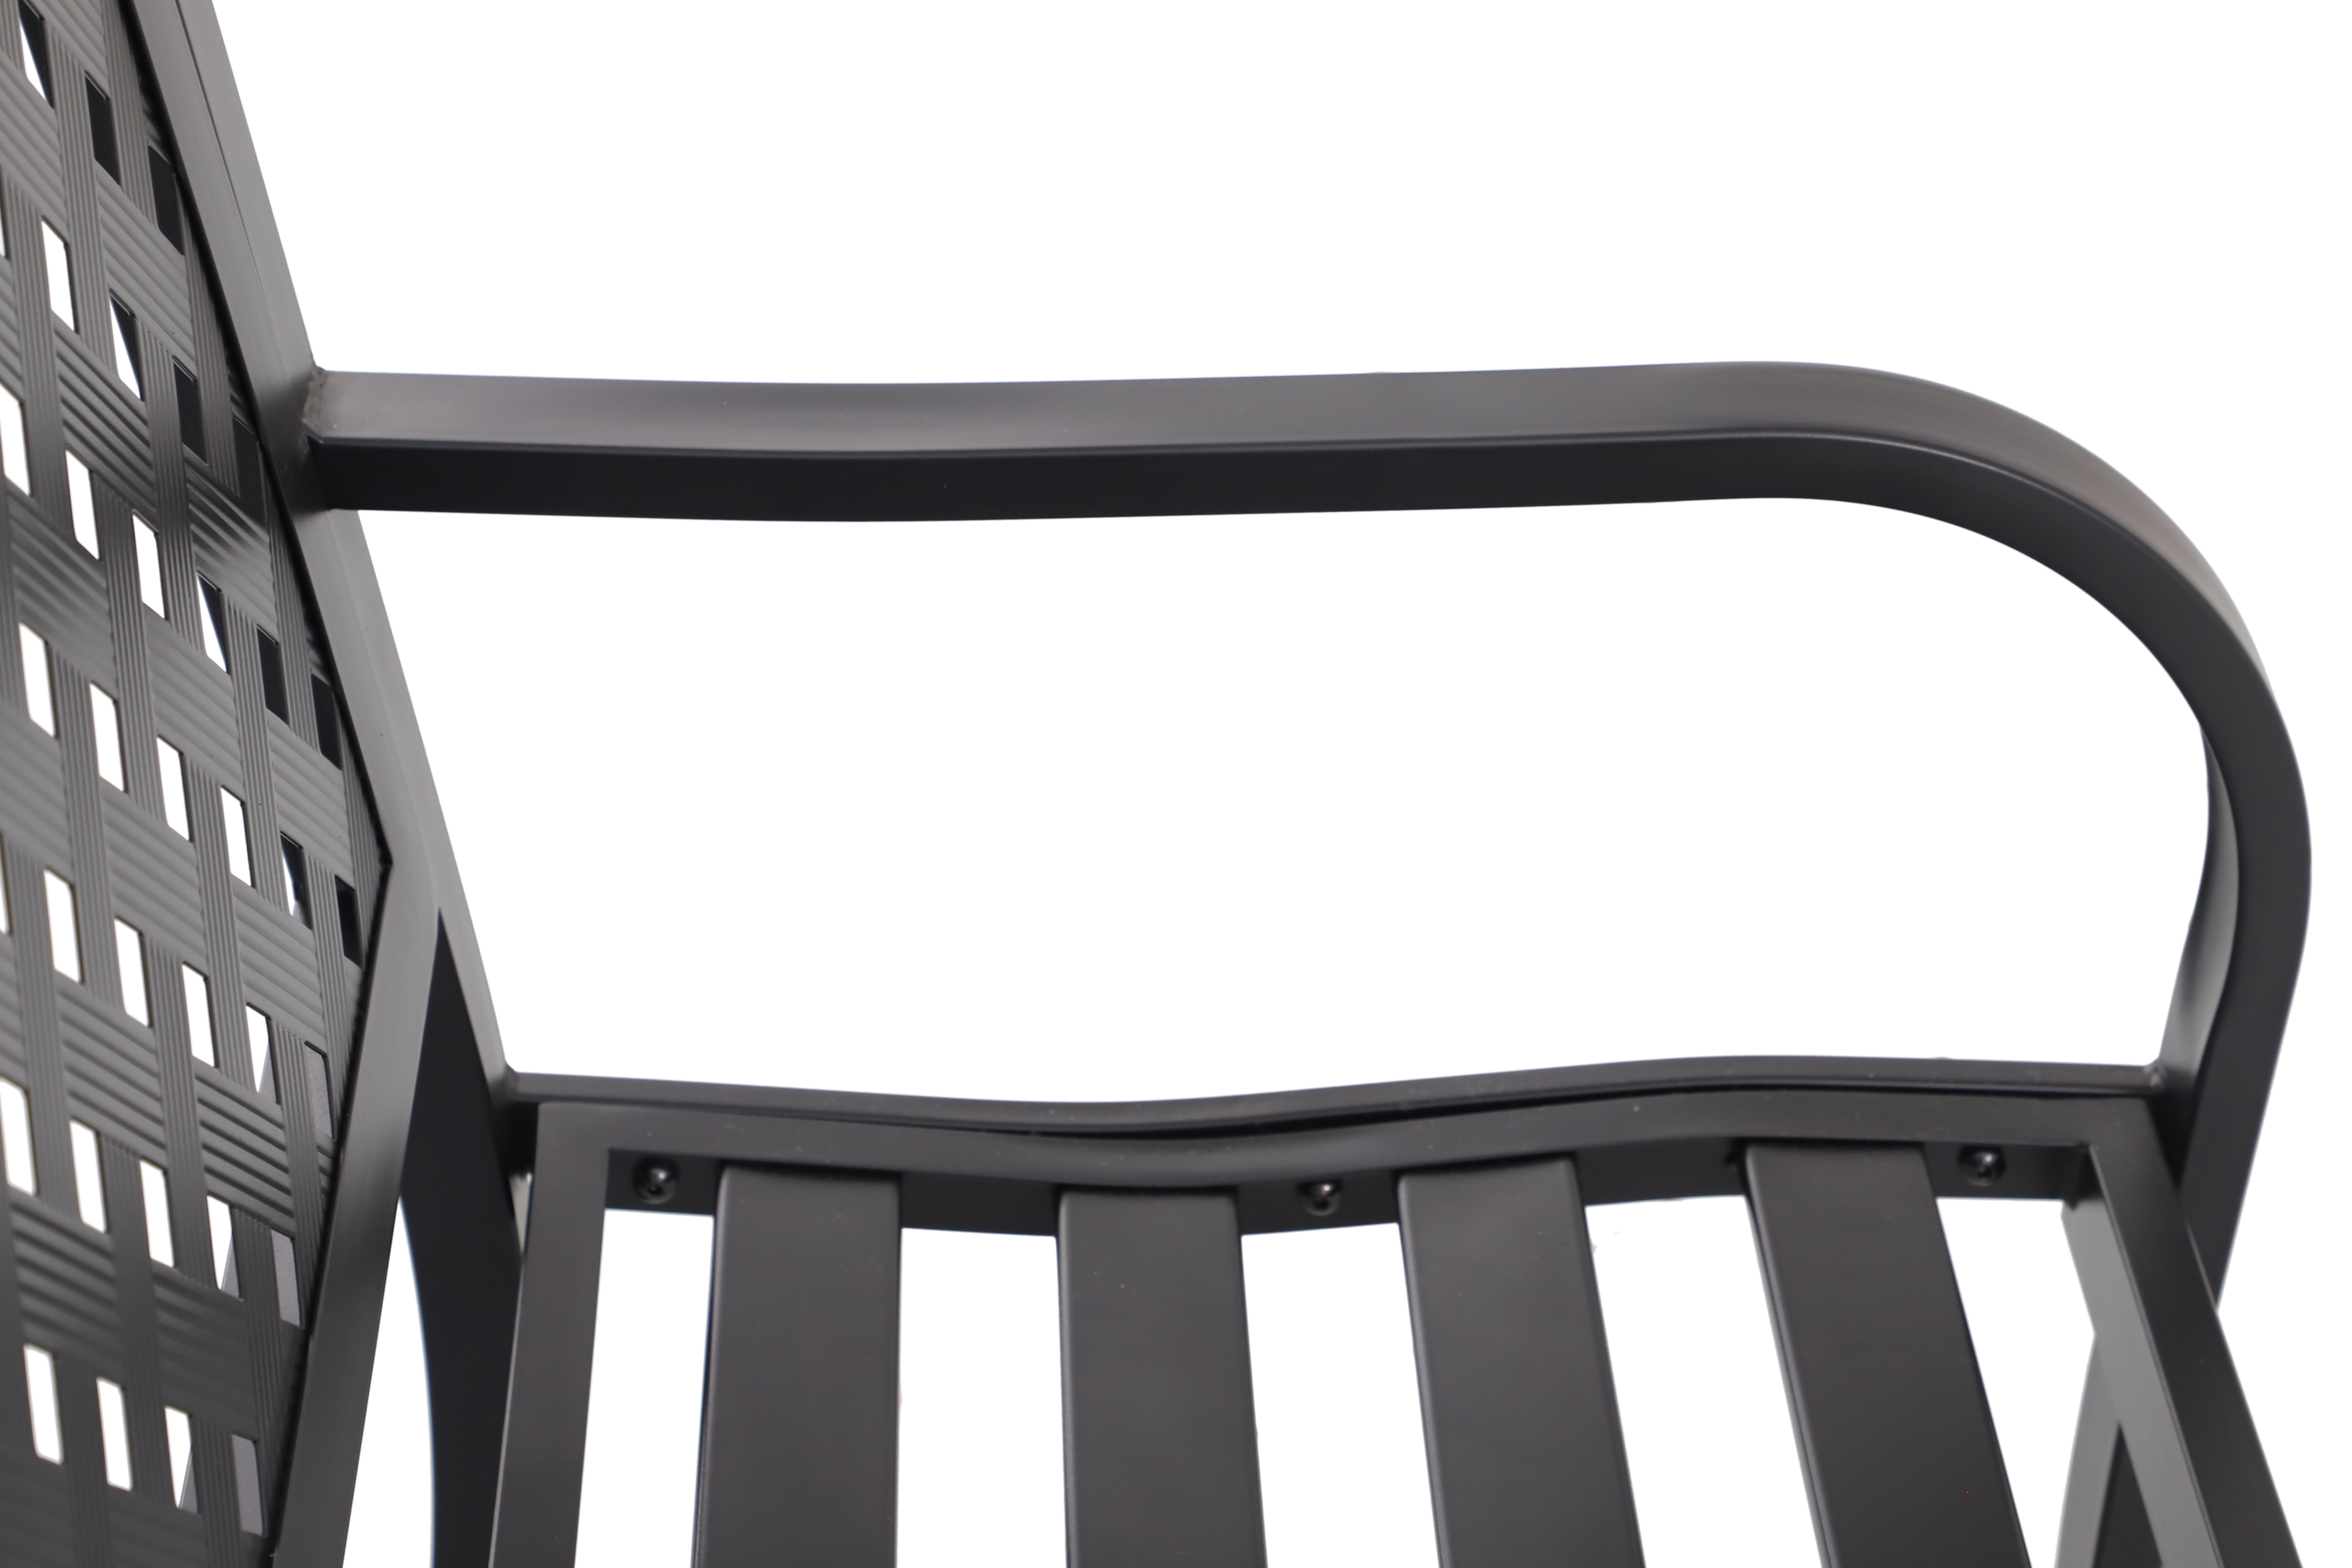 Mainstays Lattice High Back Slat Seat Steel Garden Bench, Black - image 9 of 12